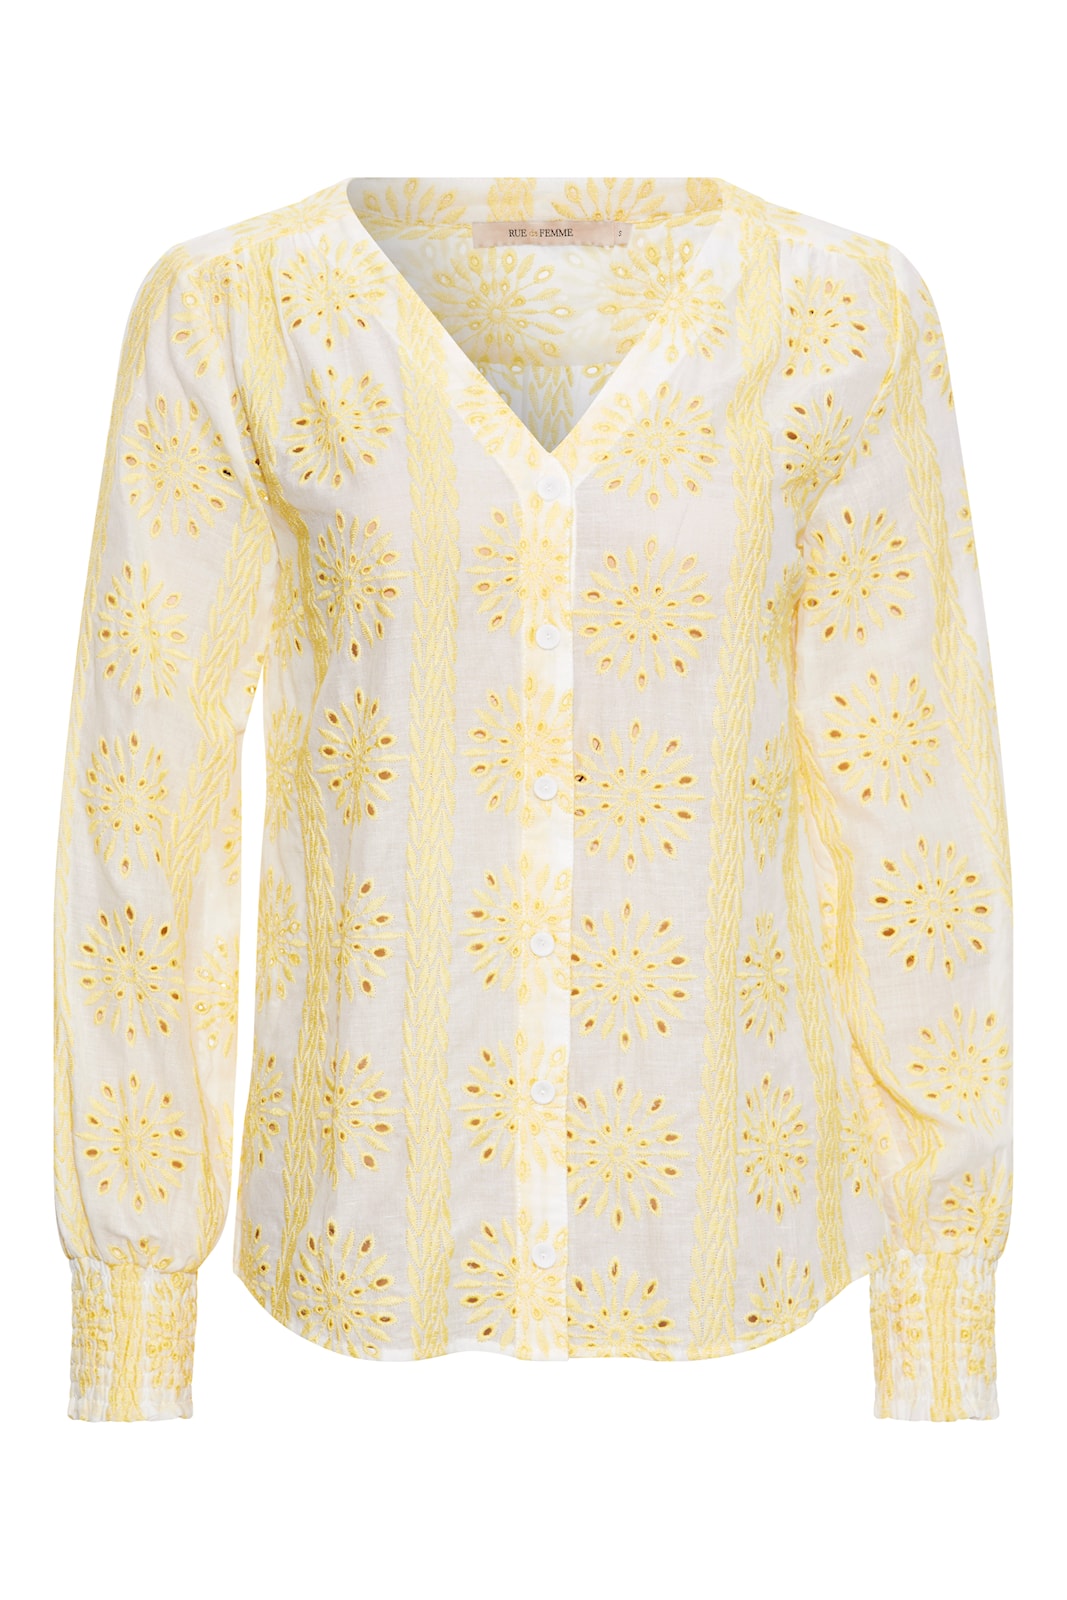 Rue De Femme  White and Lemon v neck shirt 6981 Rossa